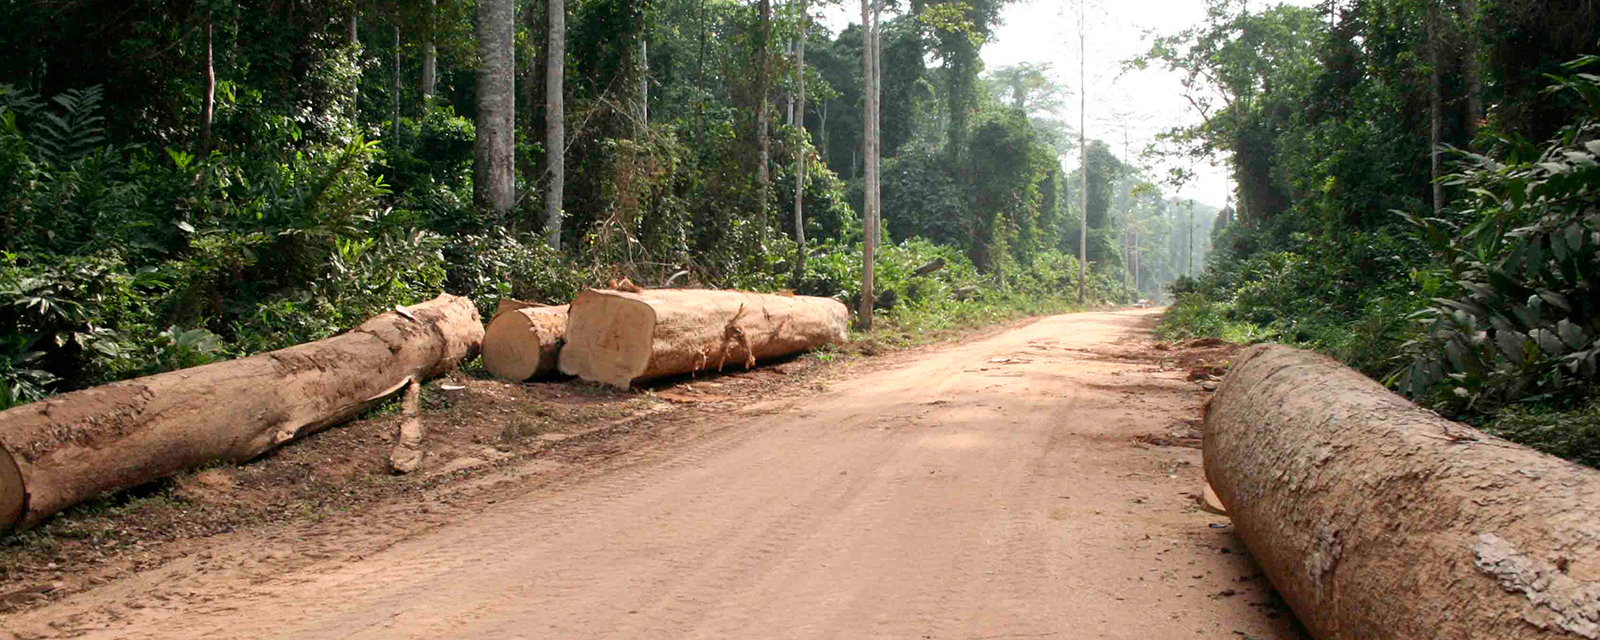 A logging path cut through the African rainforest